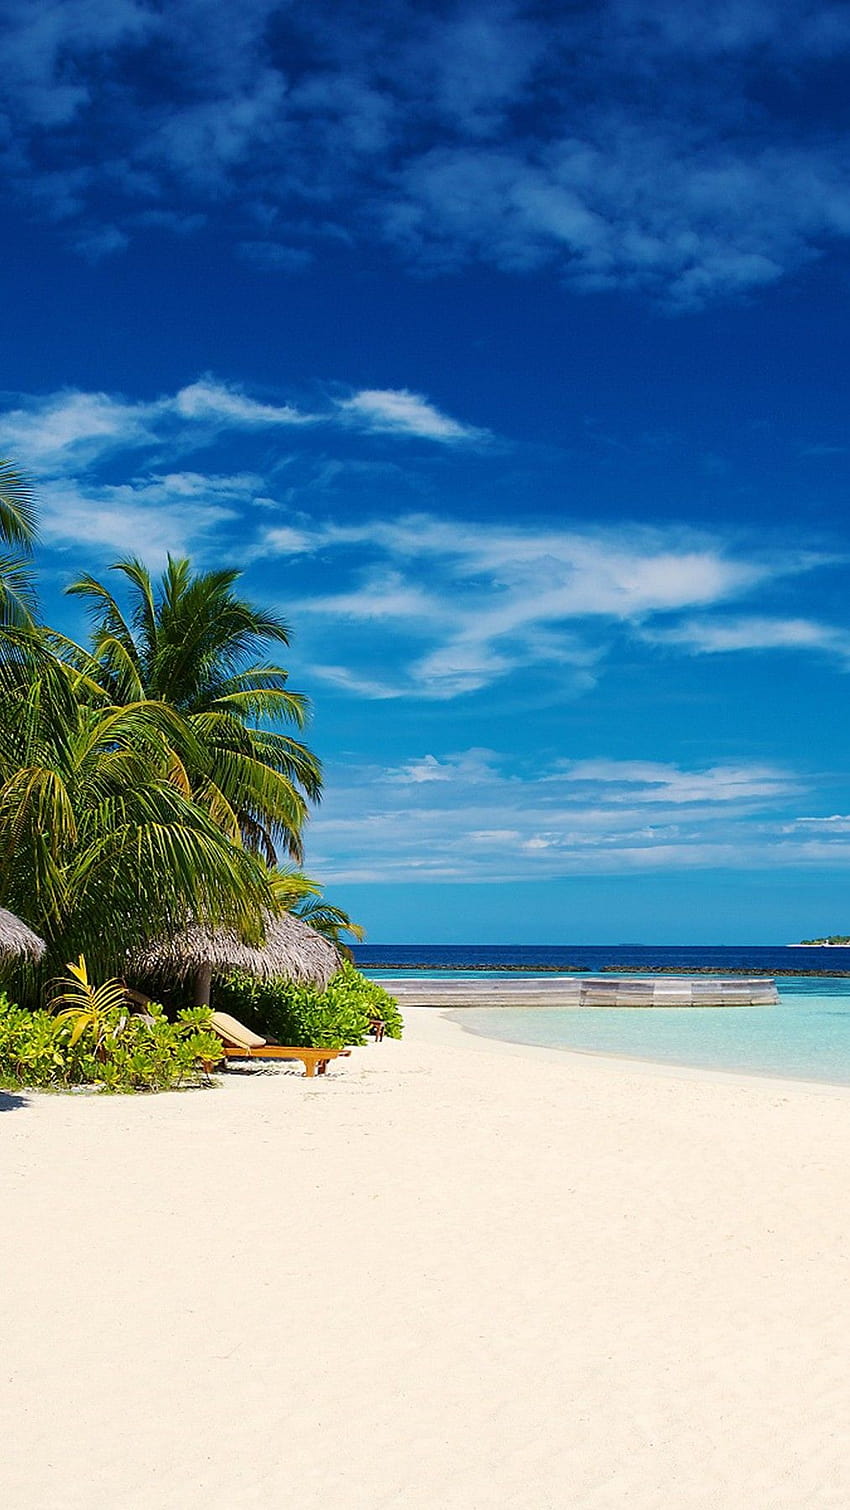 Hermosa playa naturaleza y cielo azul móvil, naturaleza playa Android móvil fondo de pantalla del teléfono